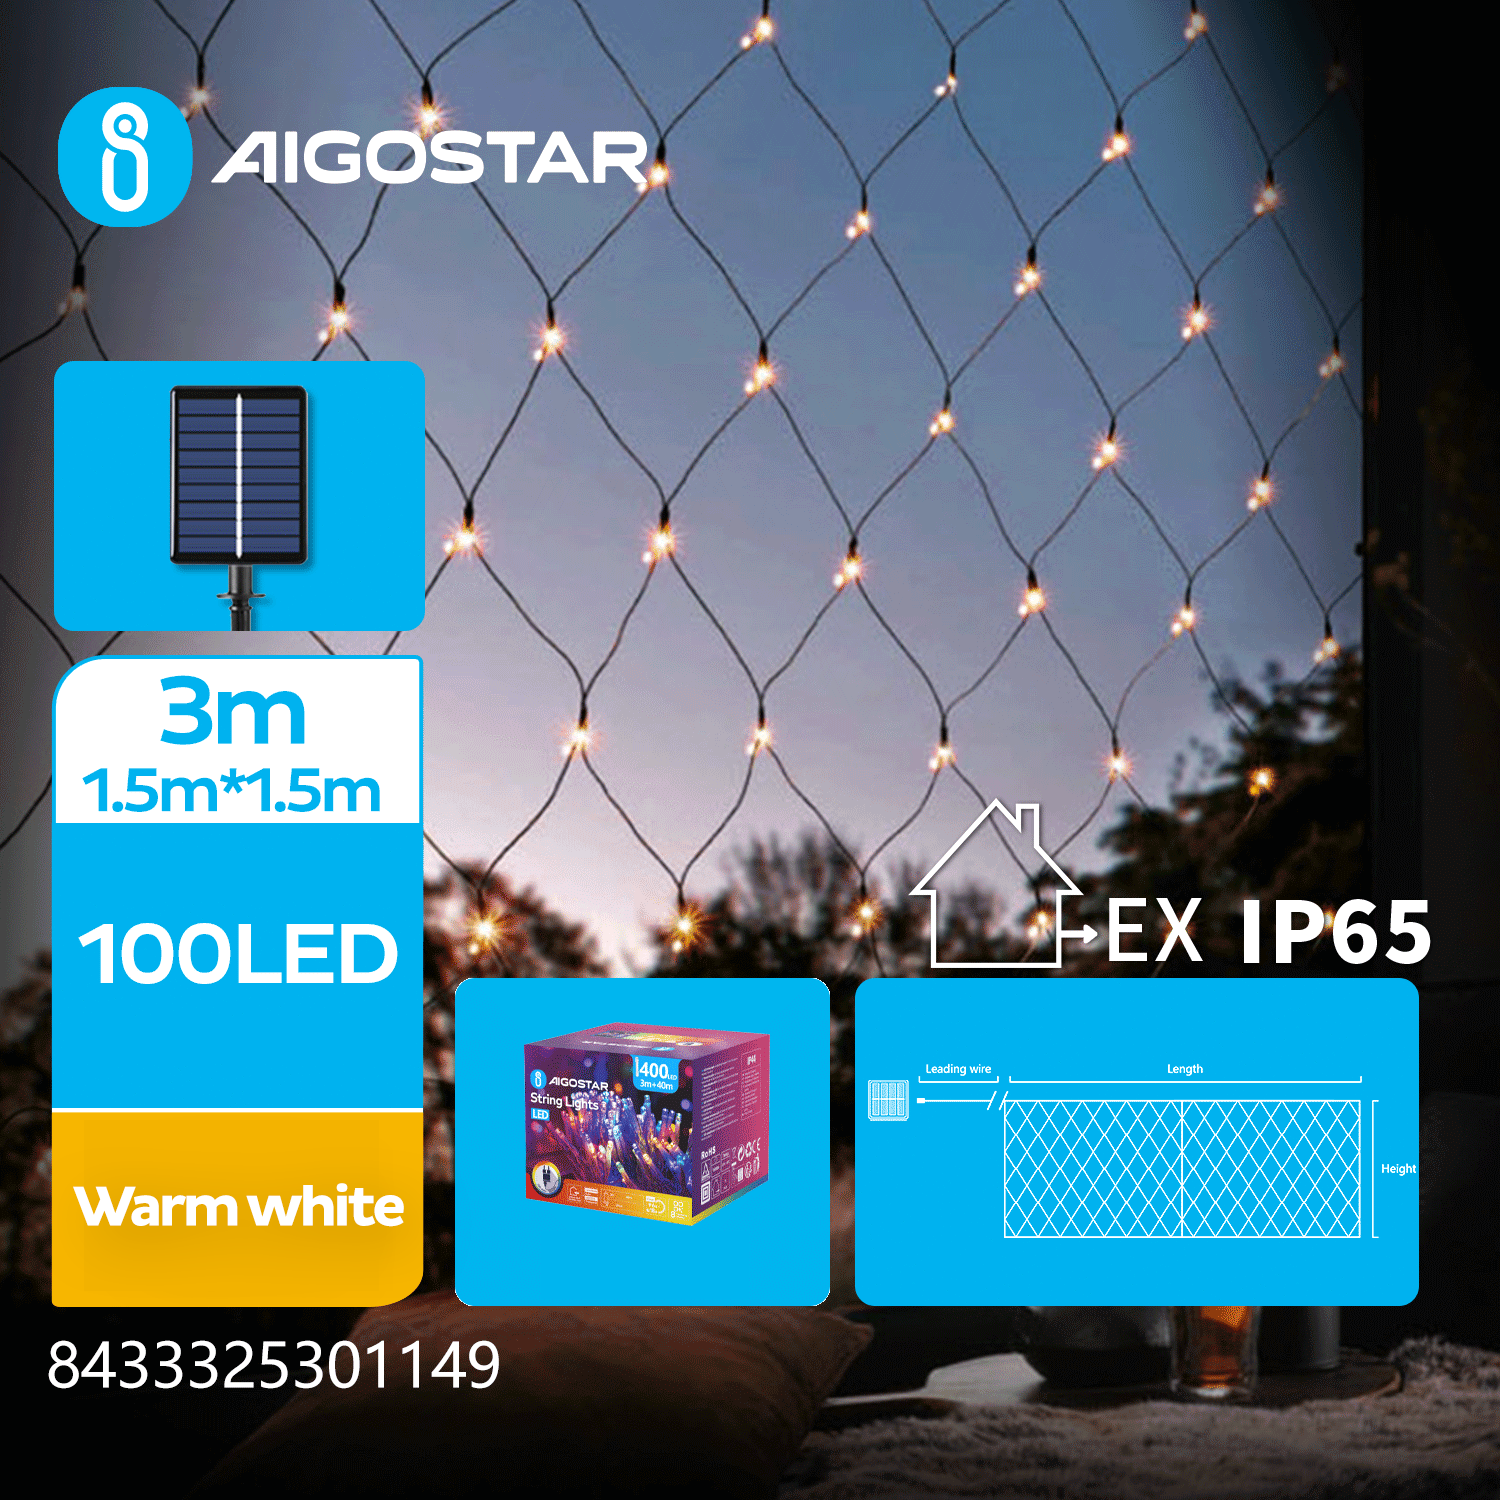 Aigostar Net van platte lichtstroken op zonne-energie, Warm wit, 1,5m*1,5m=3m